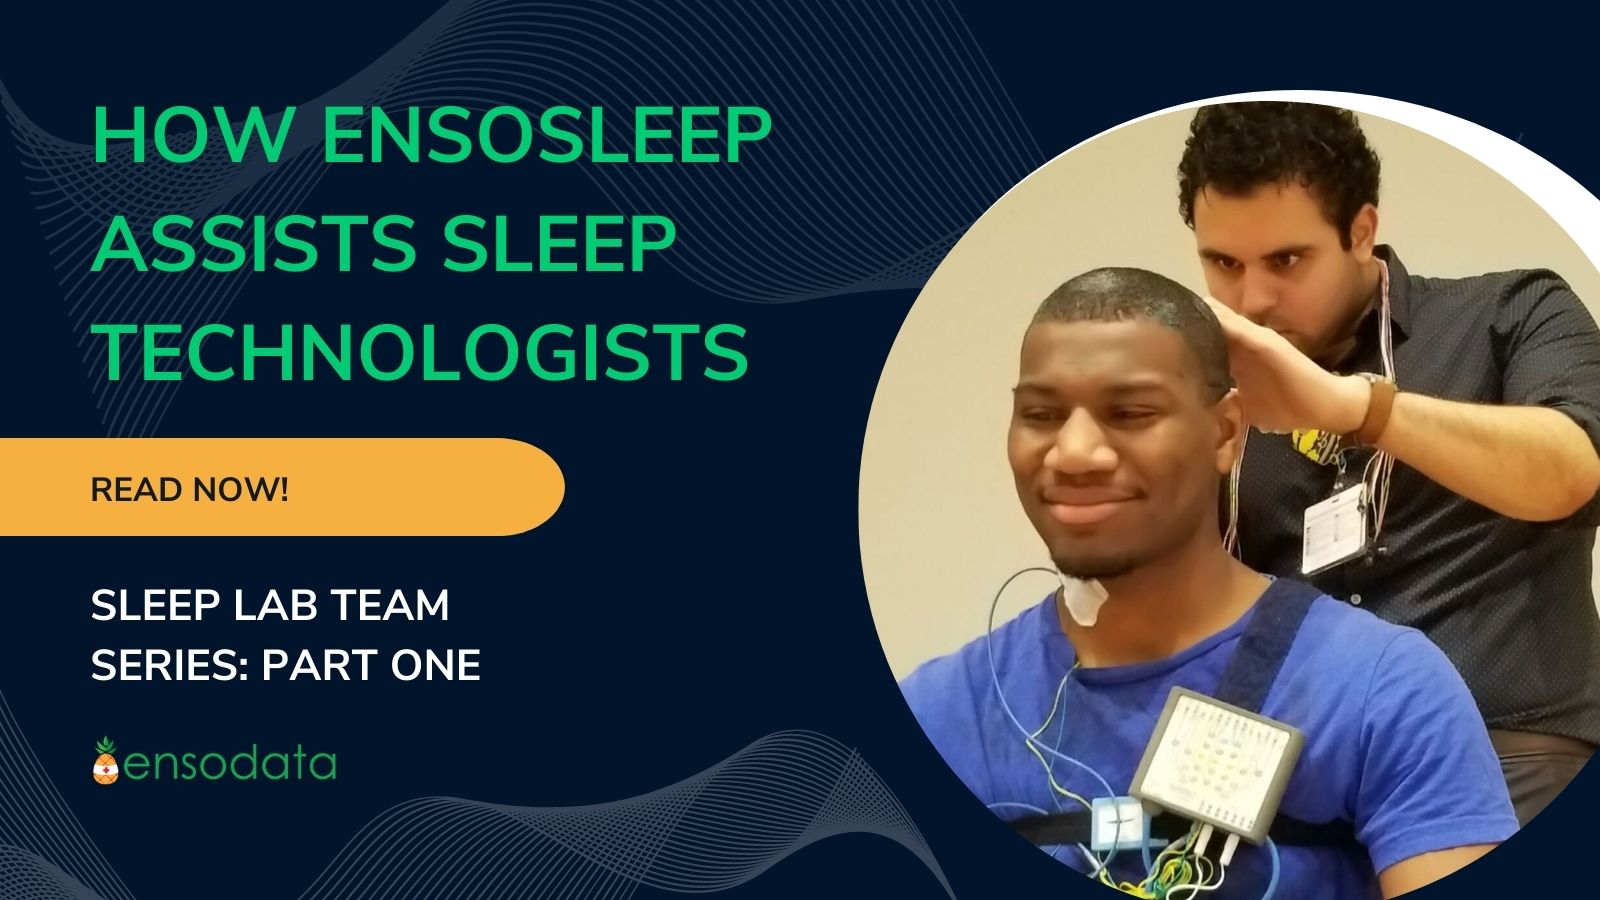 EnsoData Blog Post Image - How EnsoSleep Assists Sleep Technologists